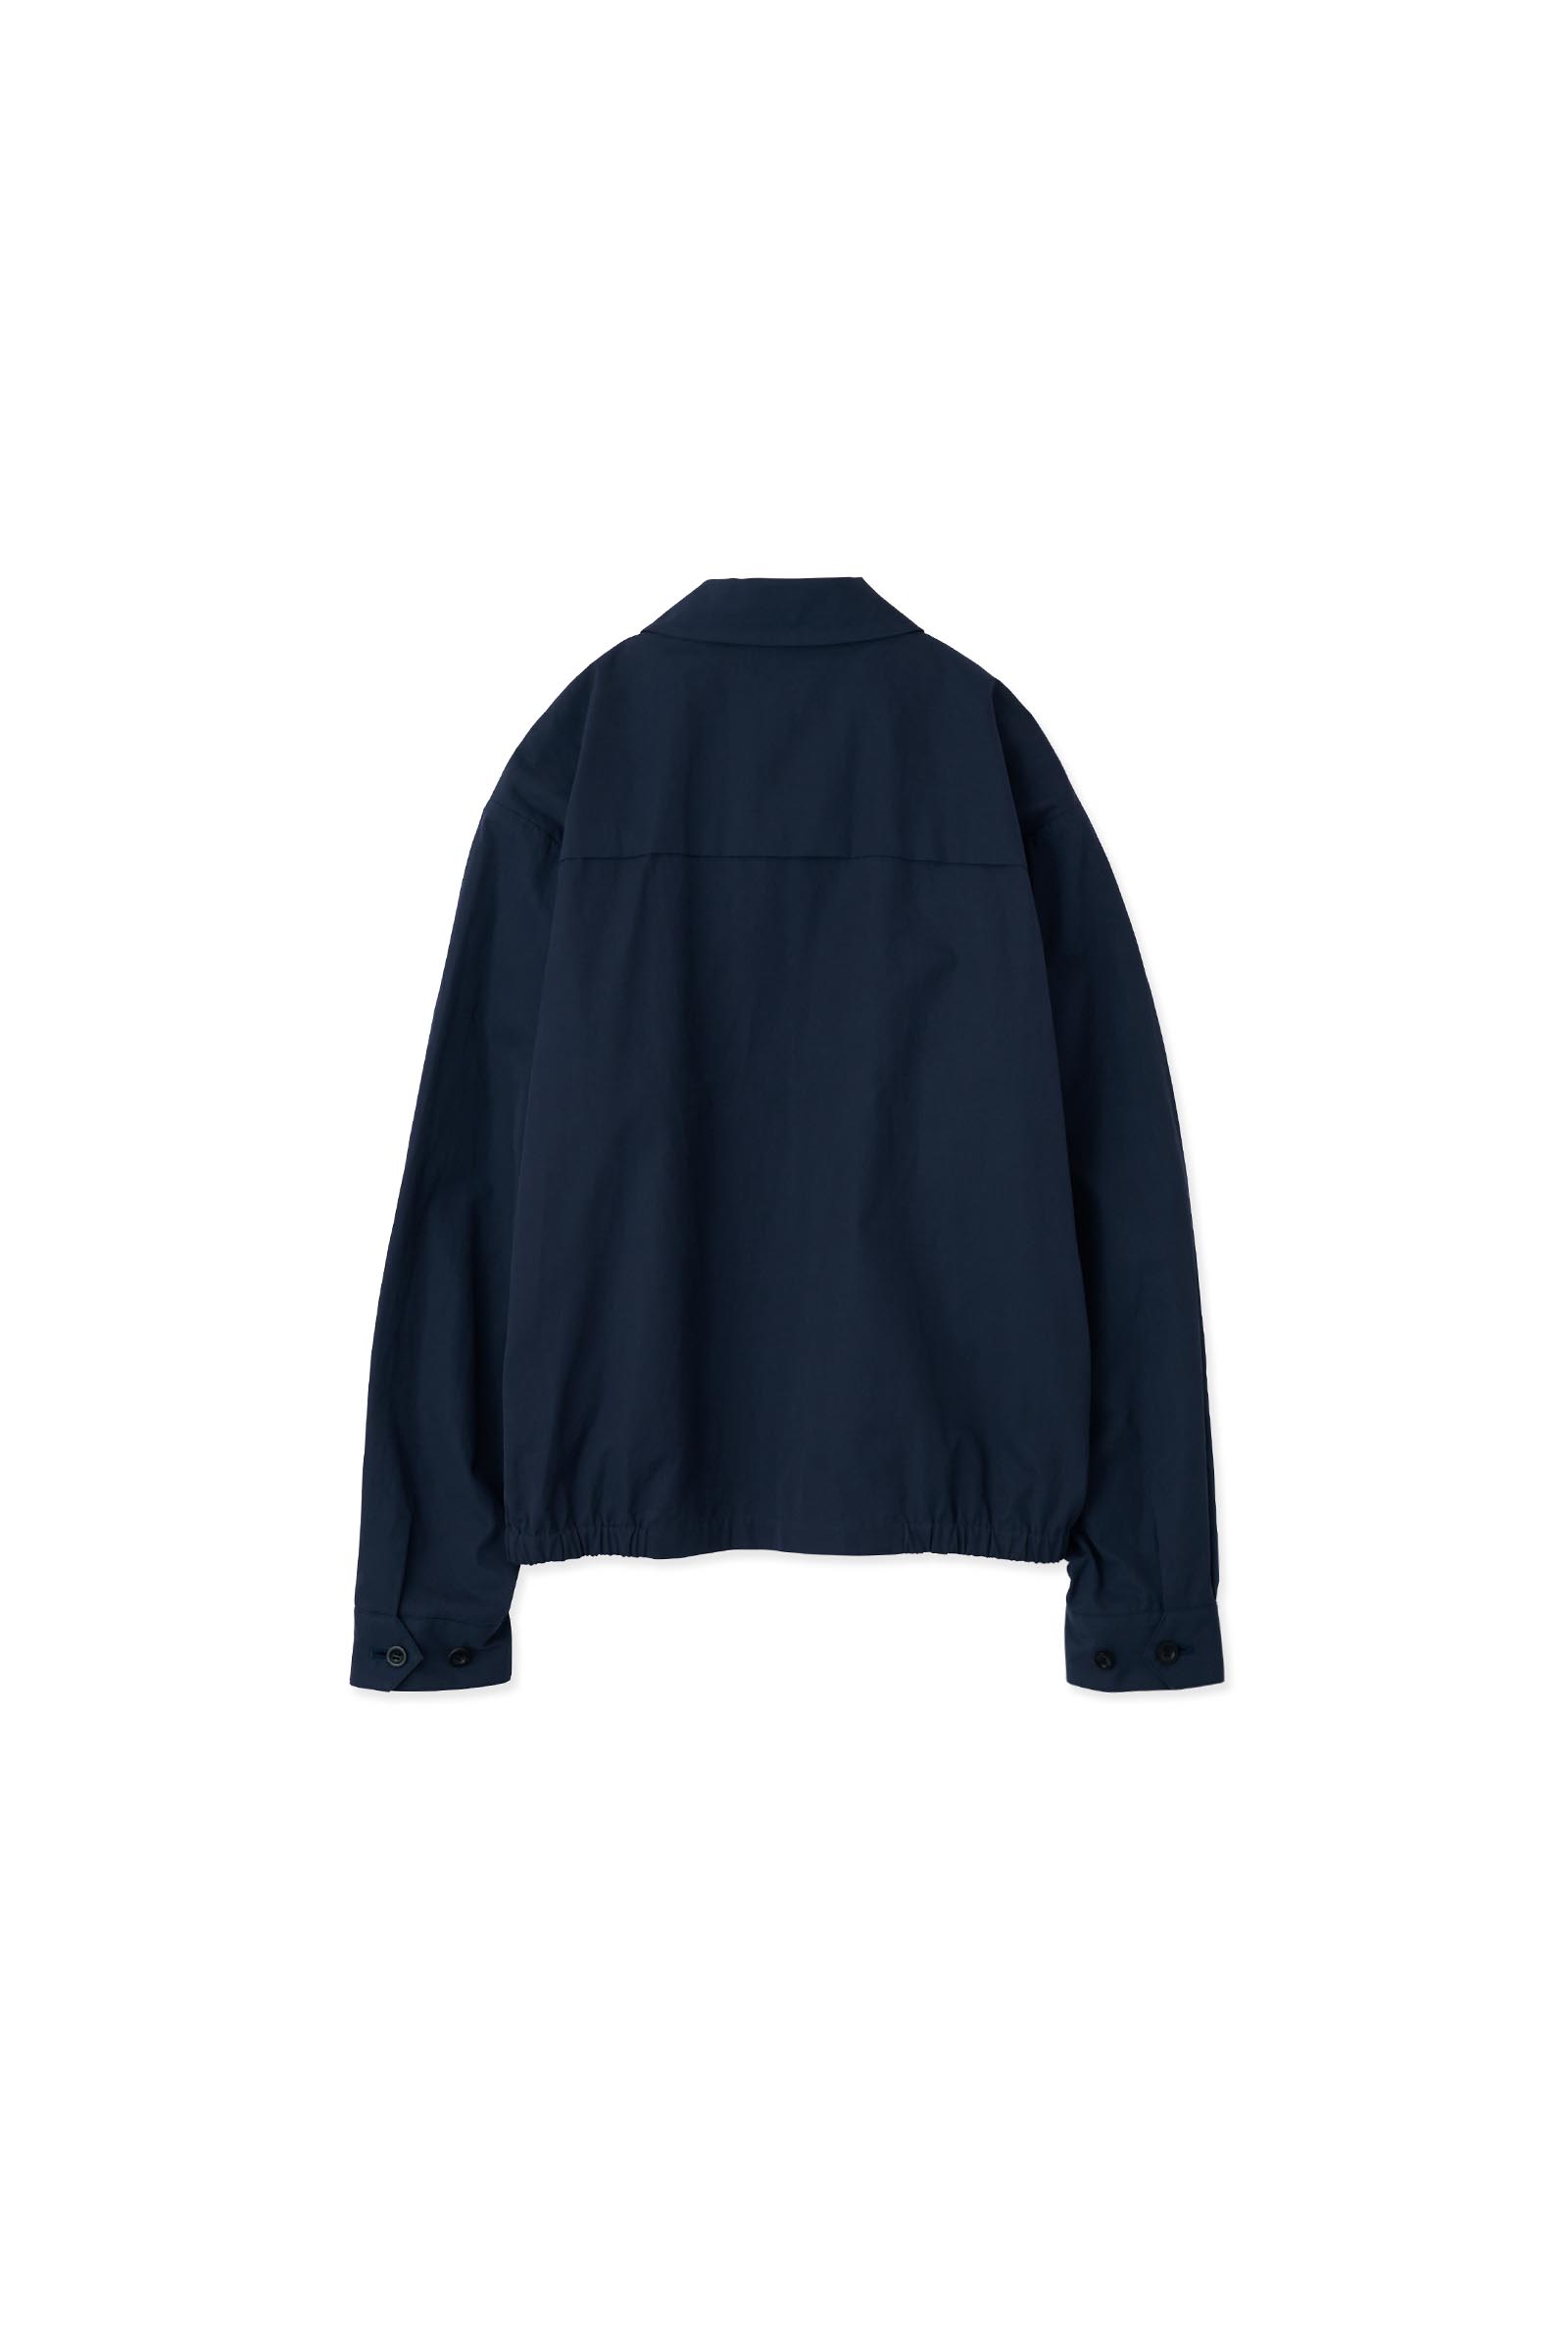 HERILL / Organic poplin Windy bay jacket